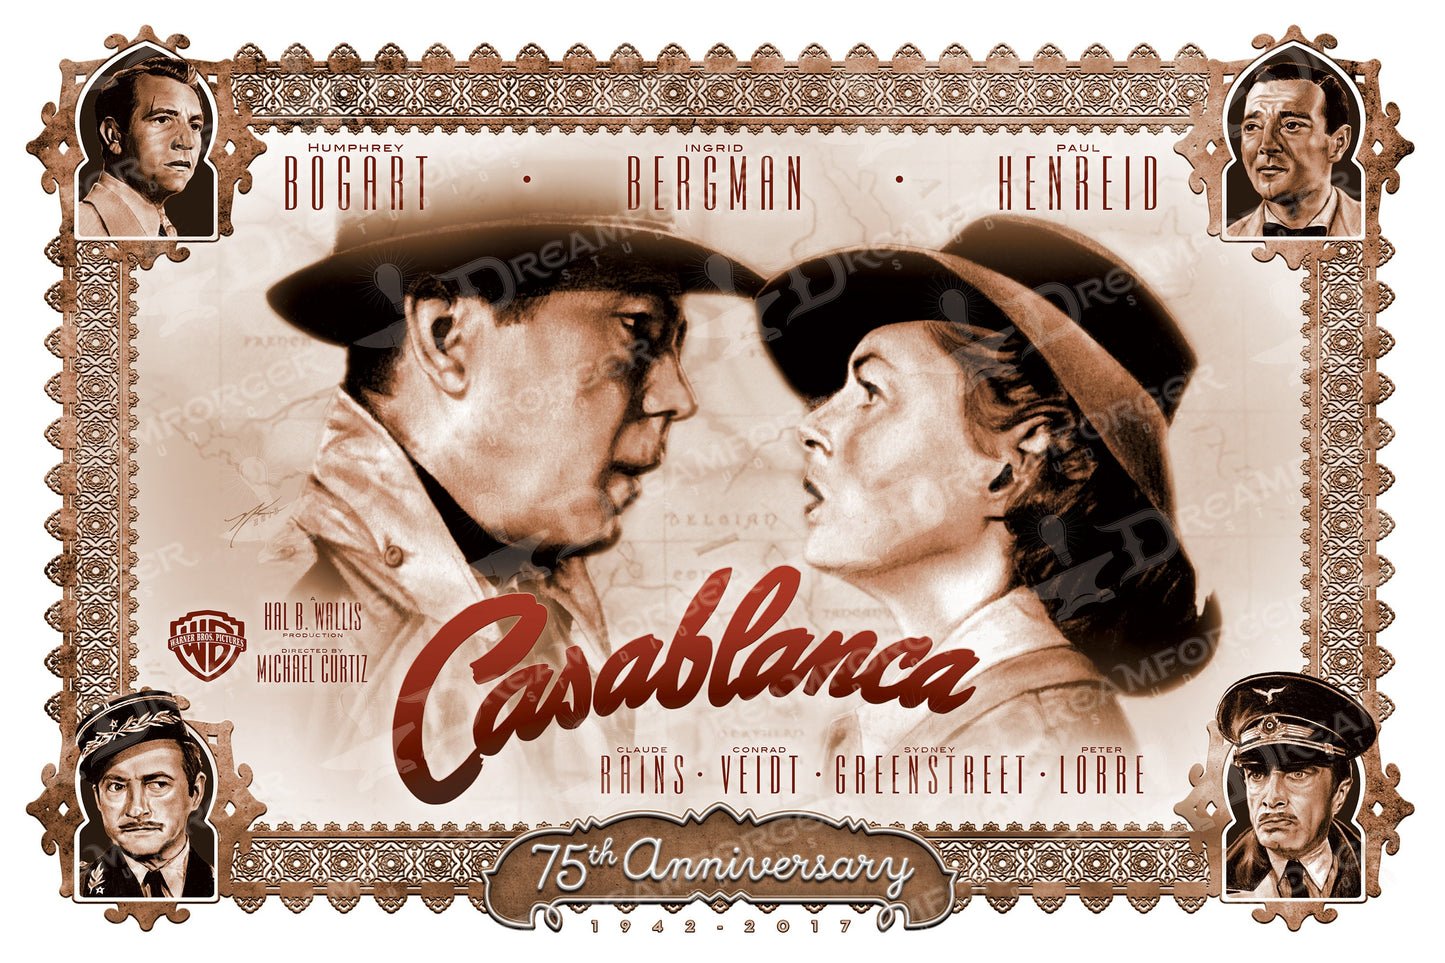 Casablanca 75th Anniversary 12" x 18" Poster Hand-Drawn Custom Art • Limited Print Run of 15